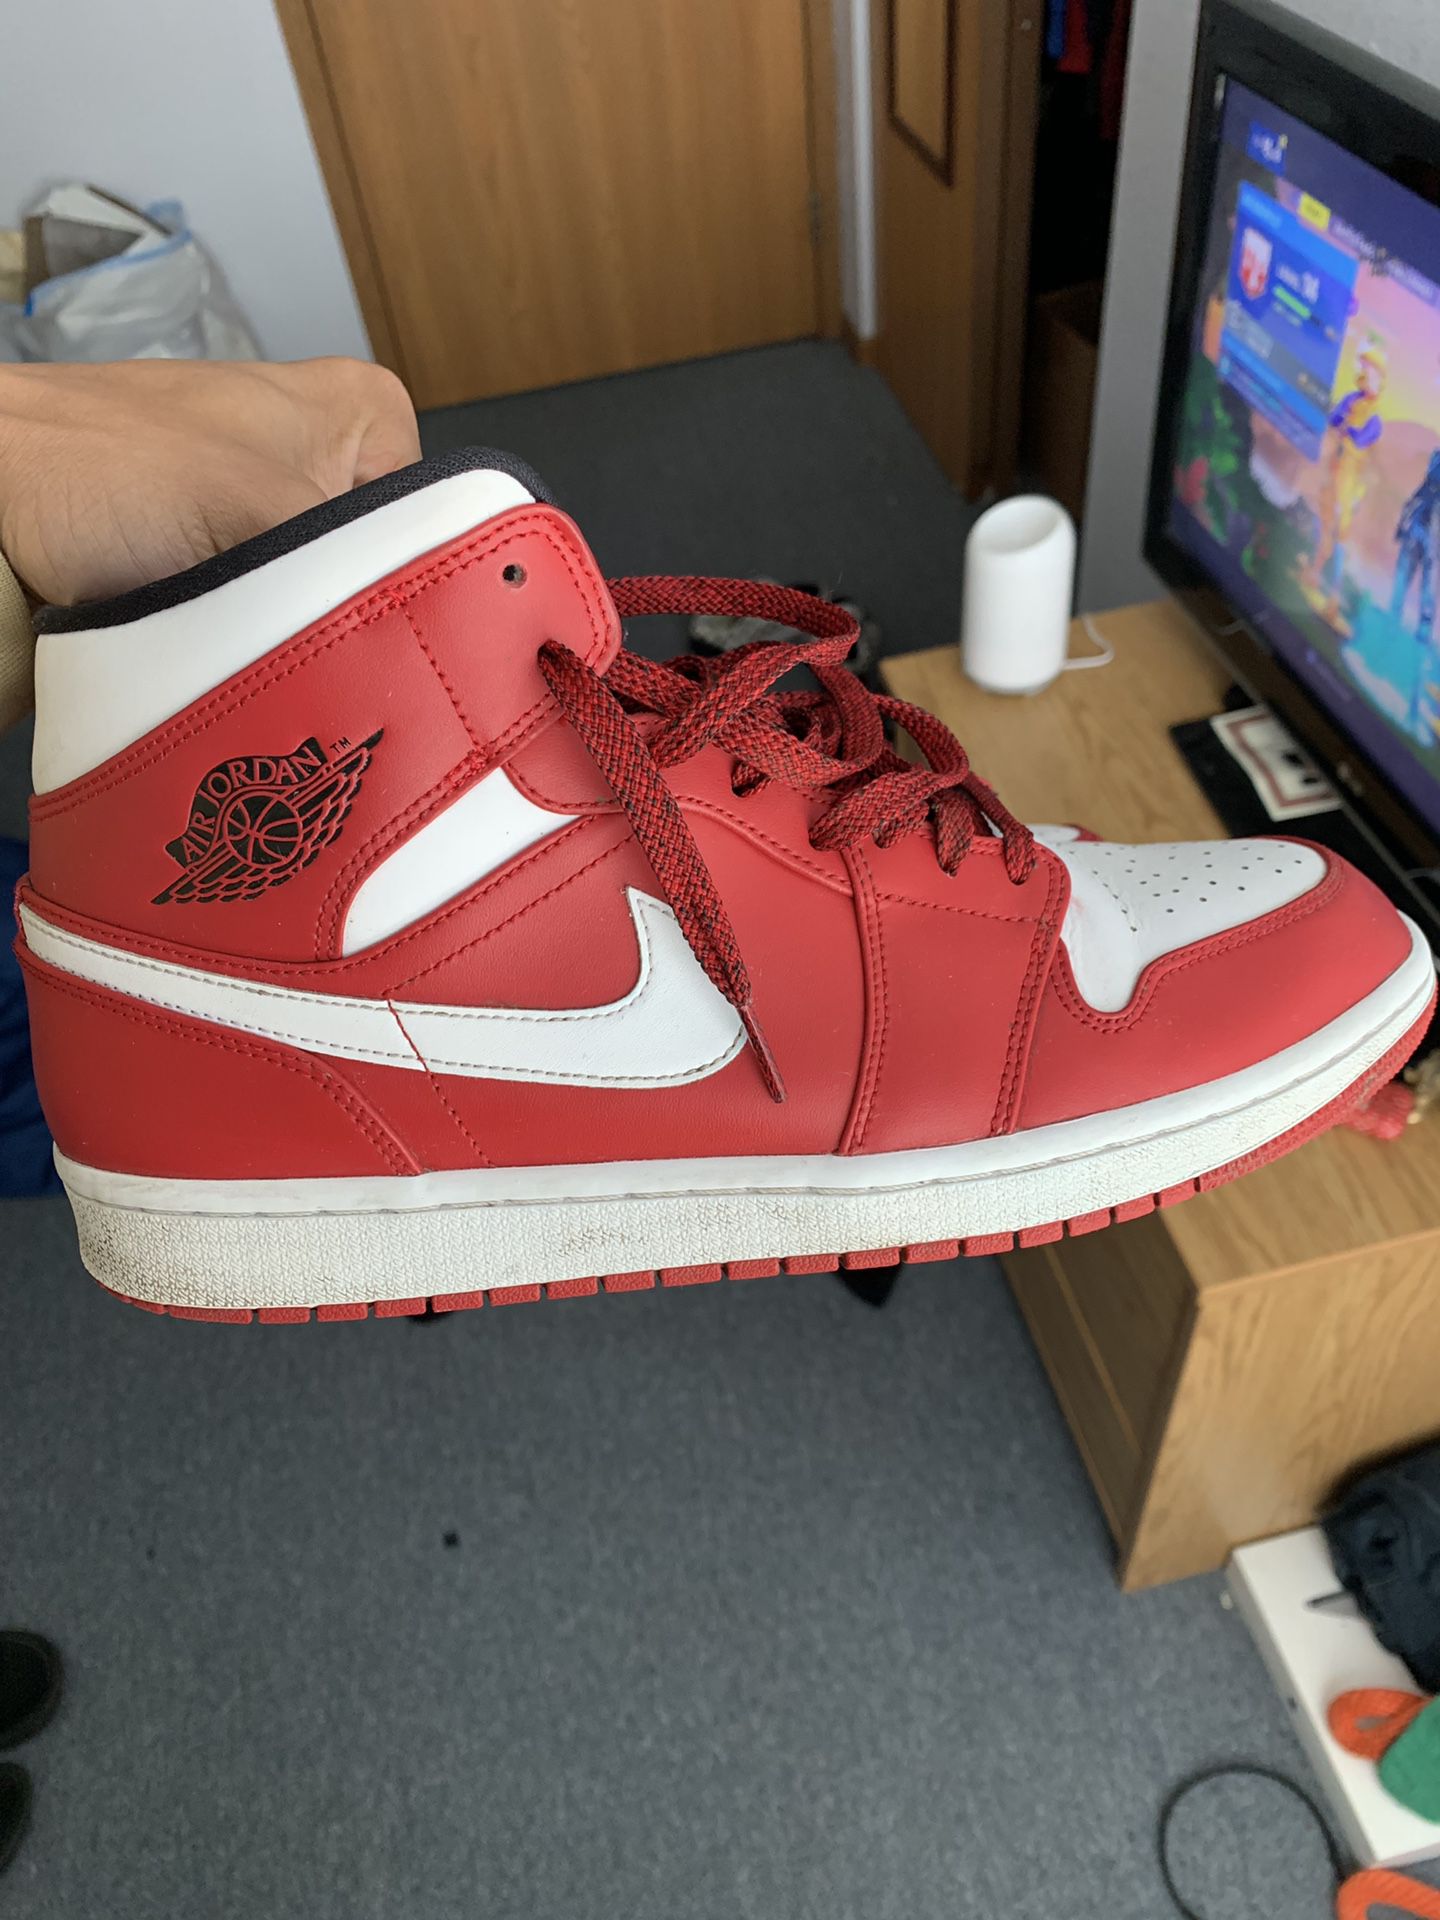 Nike Air Jordan 1 (size 10.5)